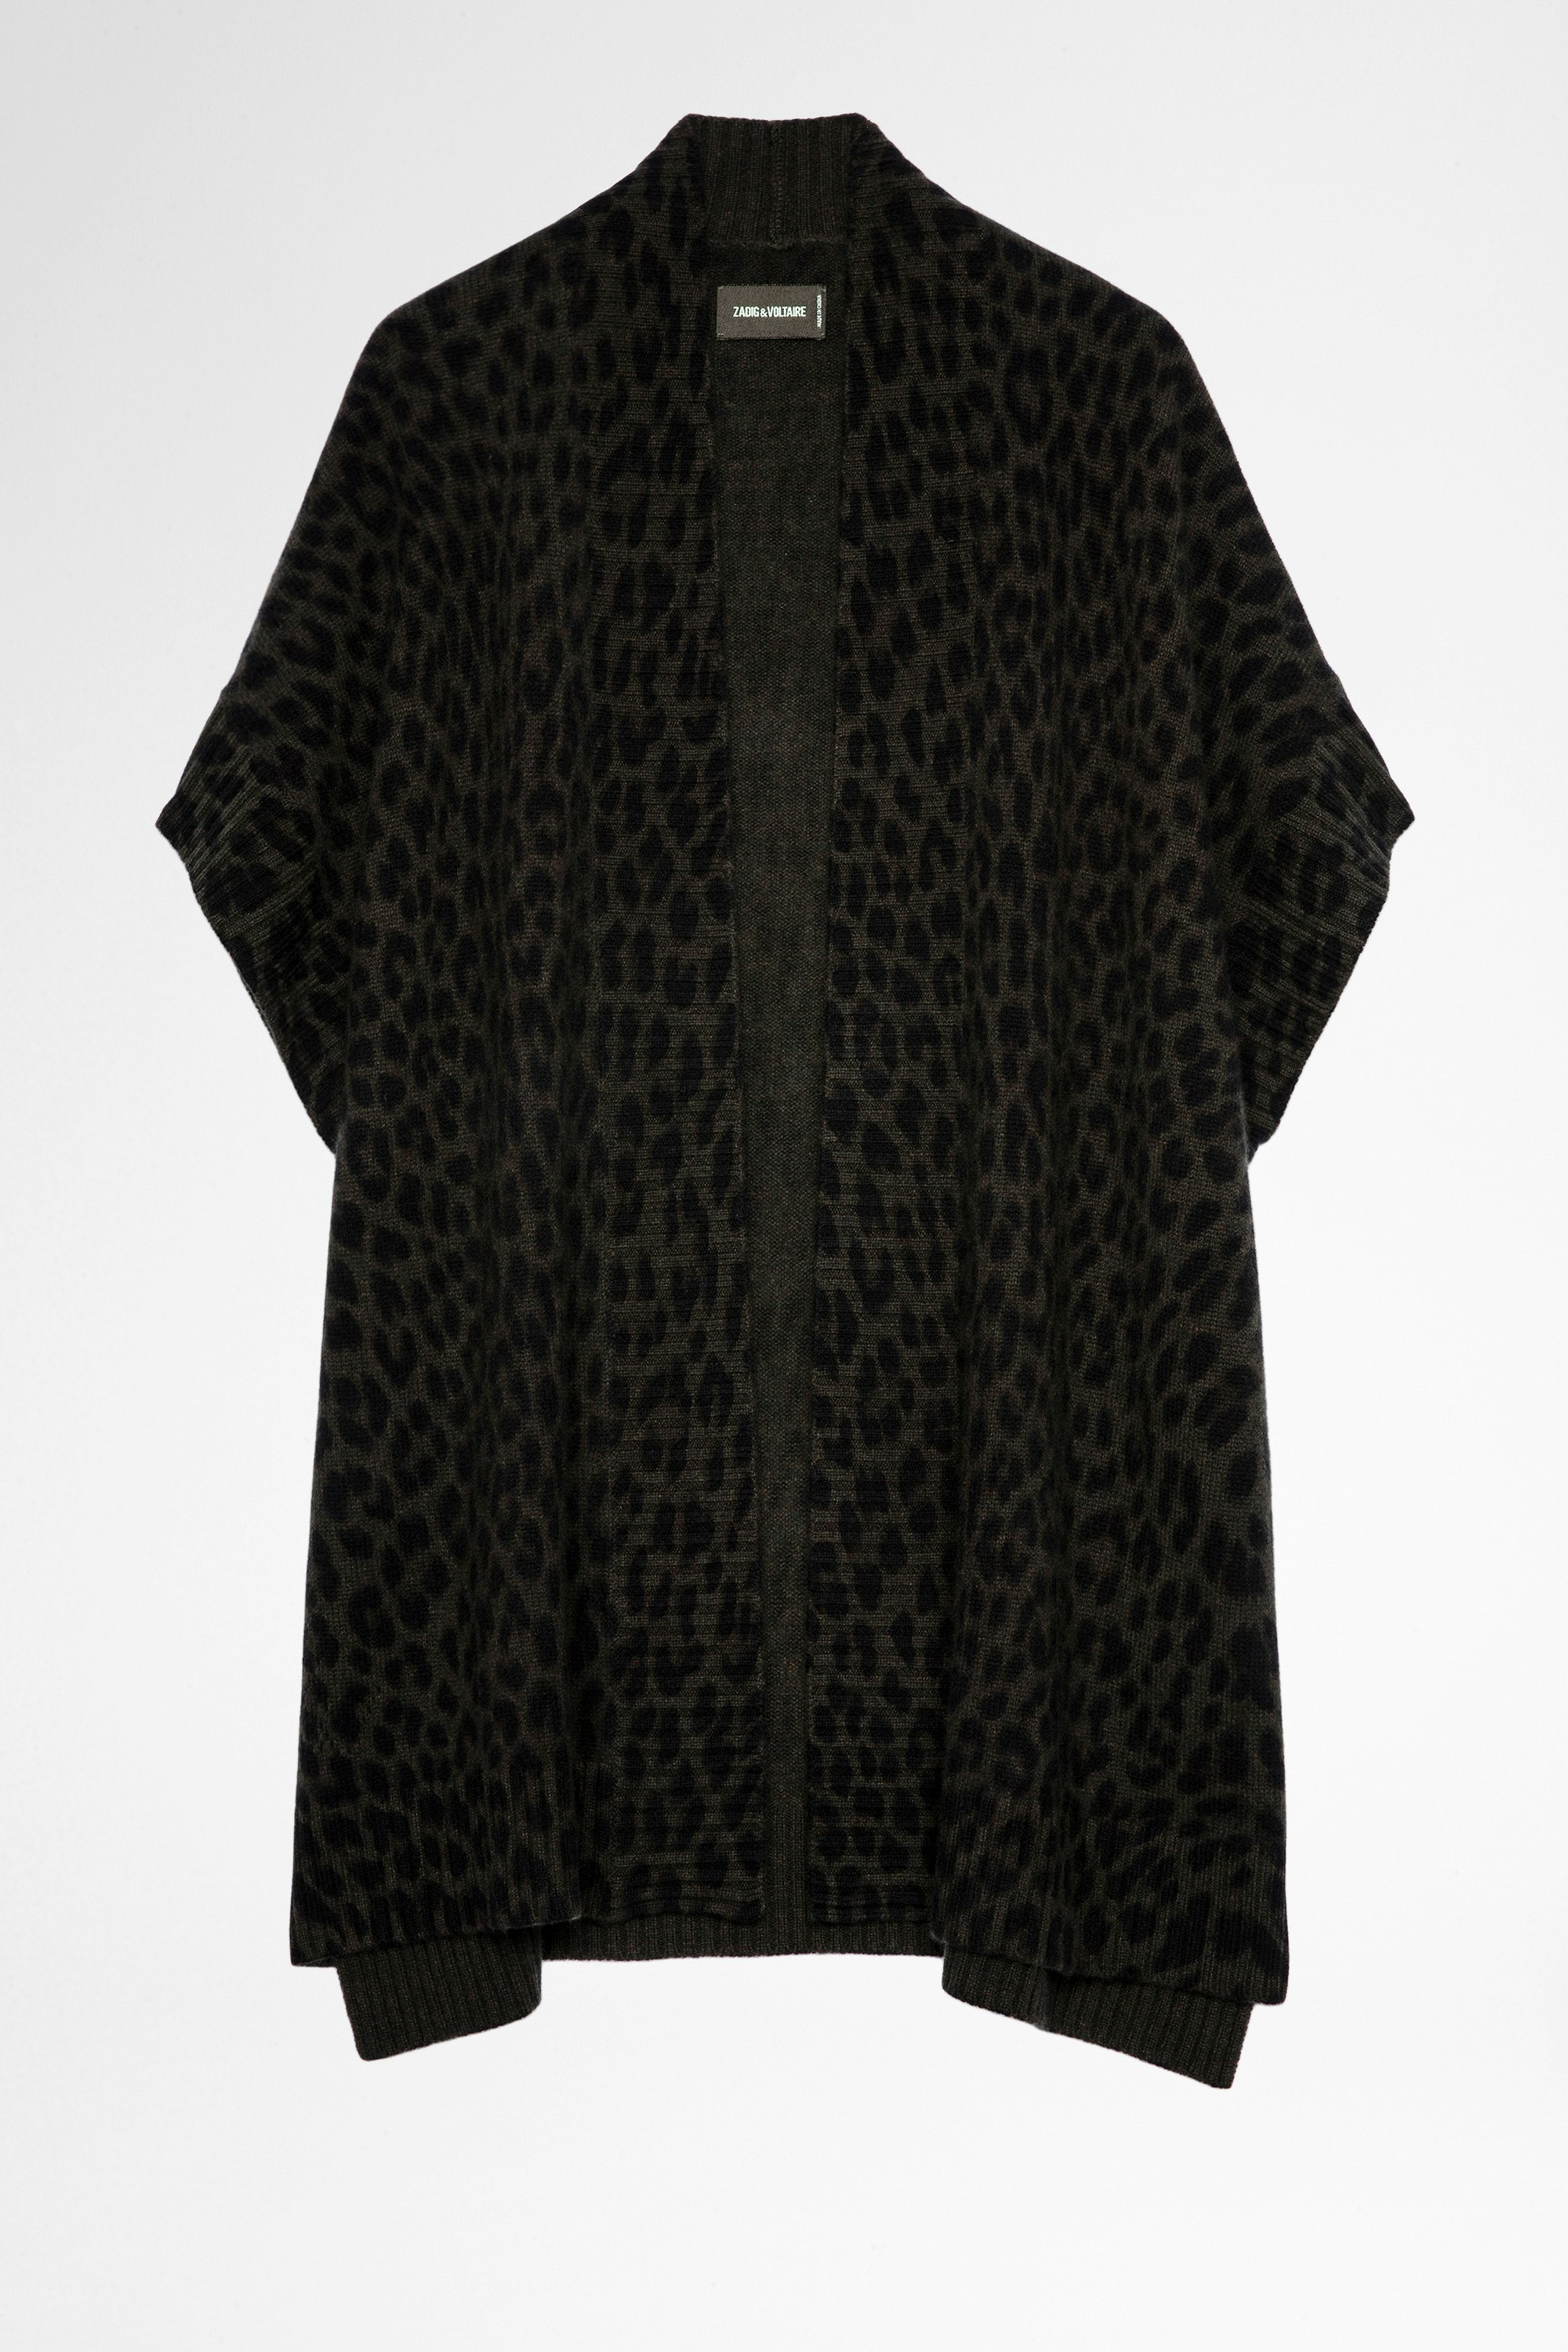 Indiany long cardigan Cashmere Women's long khaki knit cardigan with leopard print